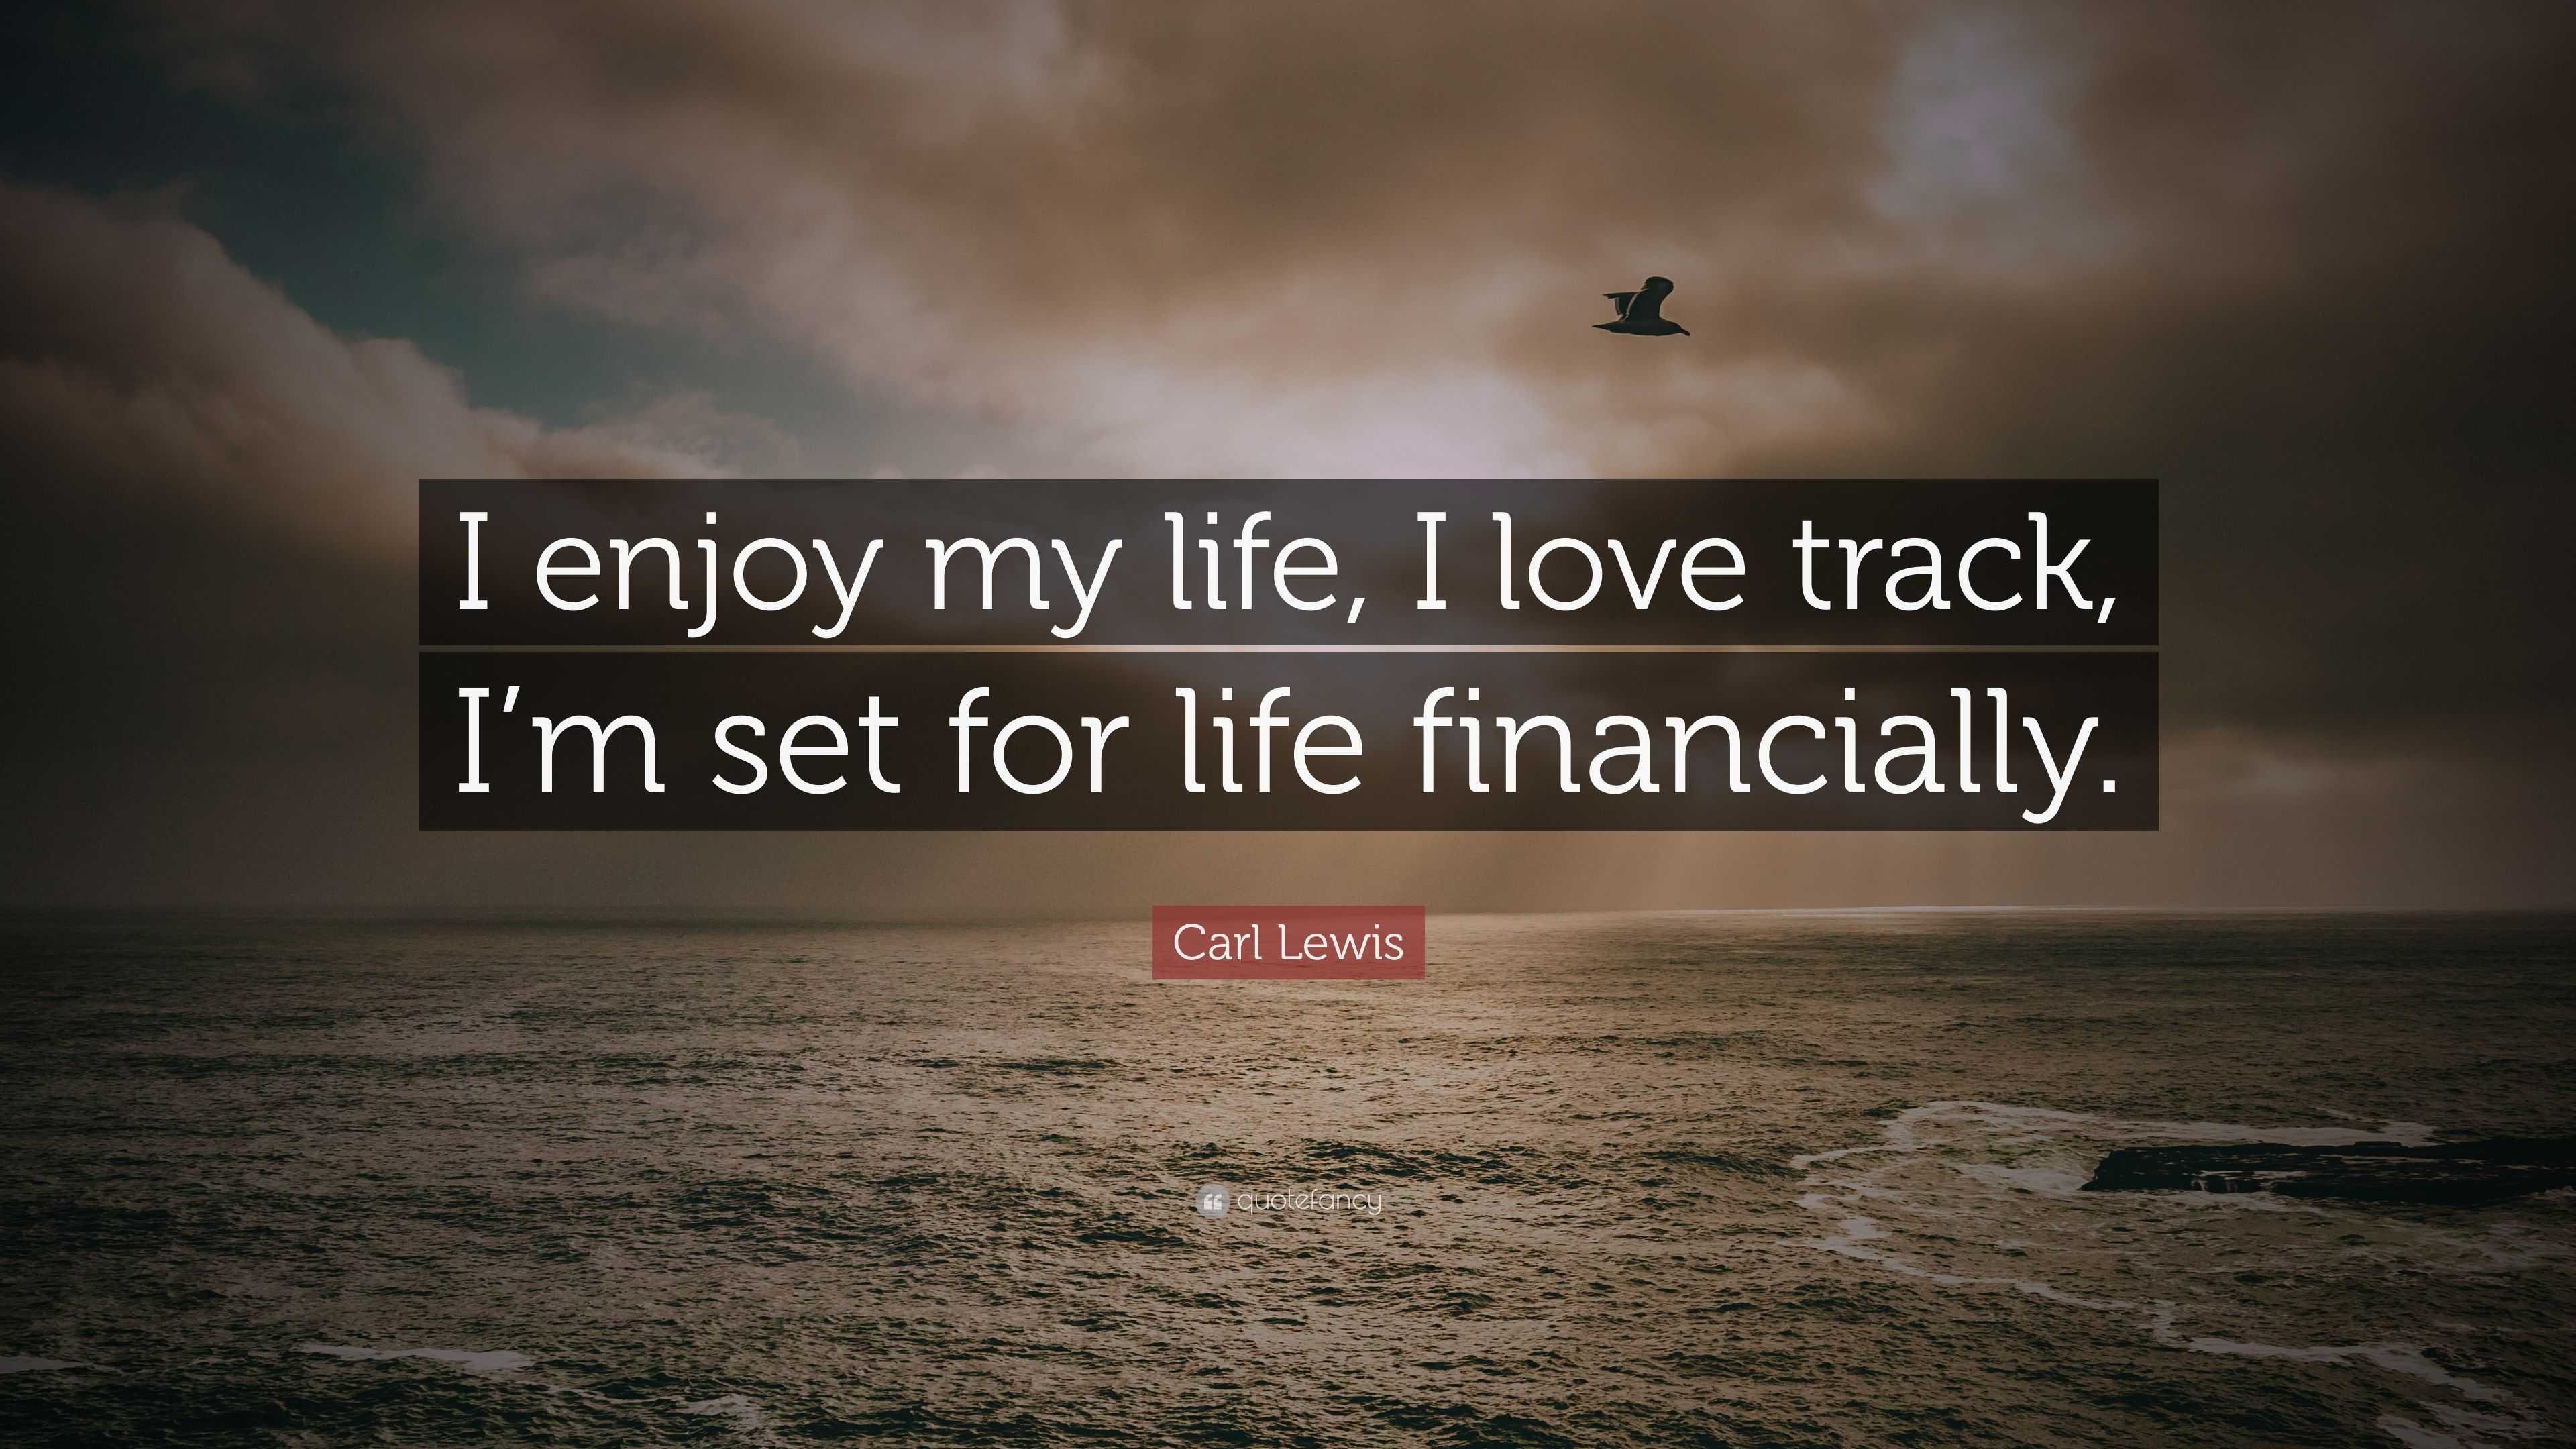 Carl Lewis Quote “I enjoy my life I love track I